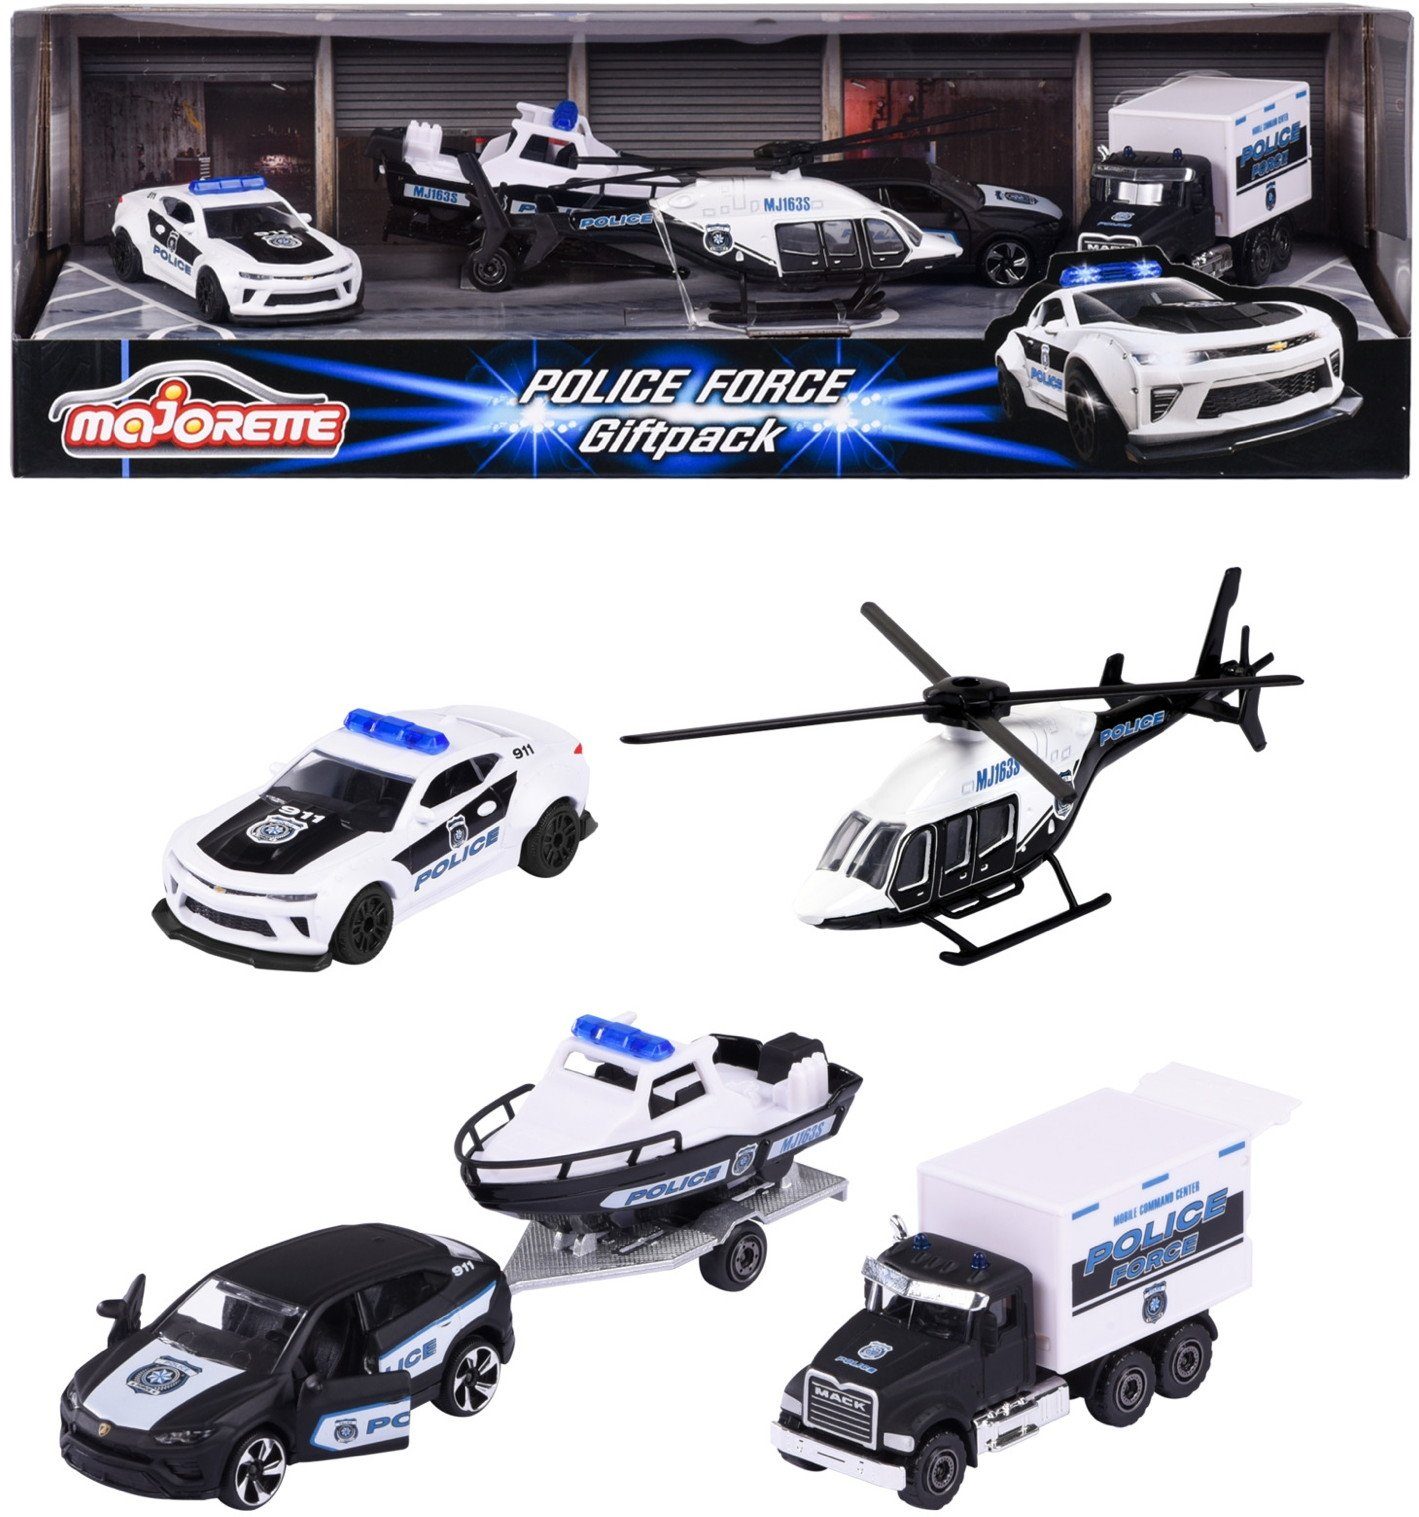 majORETTE Spielzeug-Polizei Spielzeugauto Polizei Police Force 4er Pack Giftpack 212053188